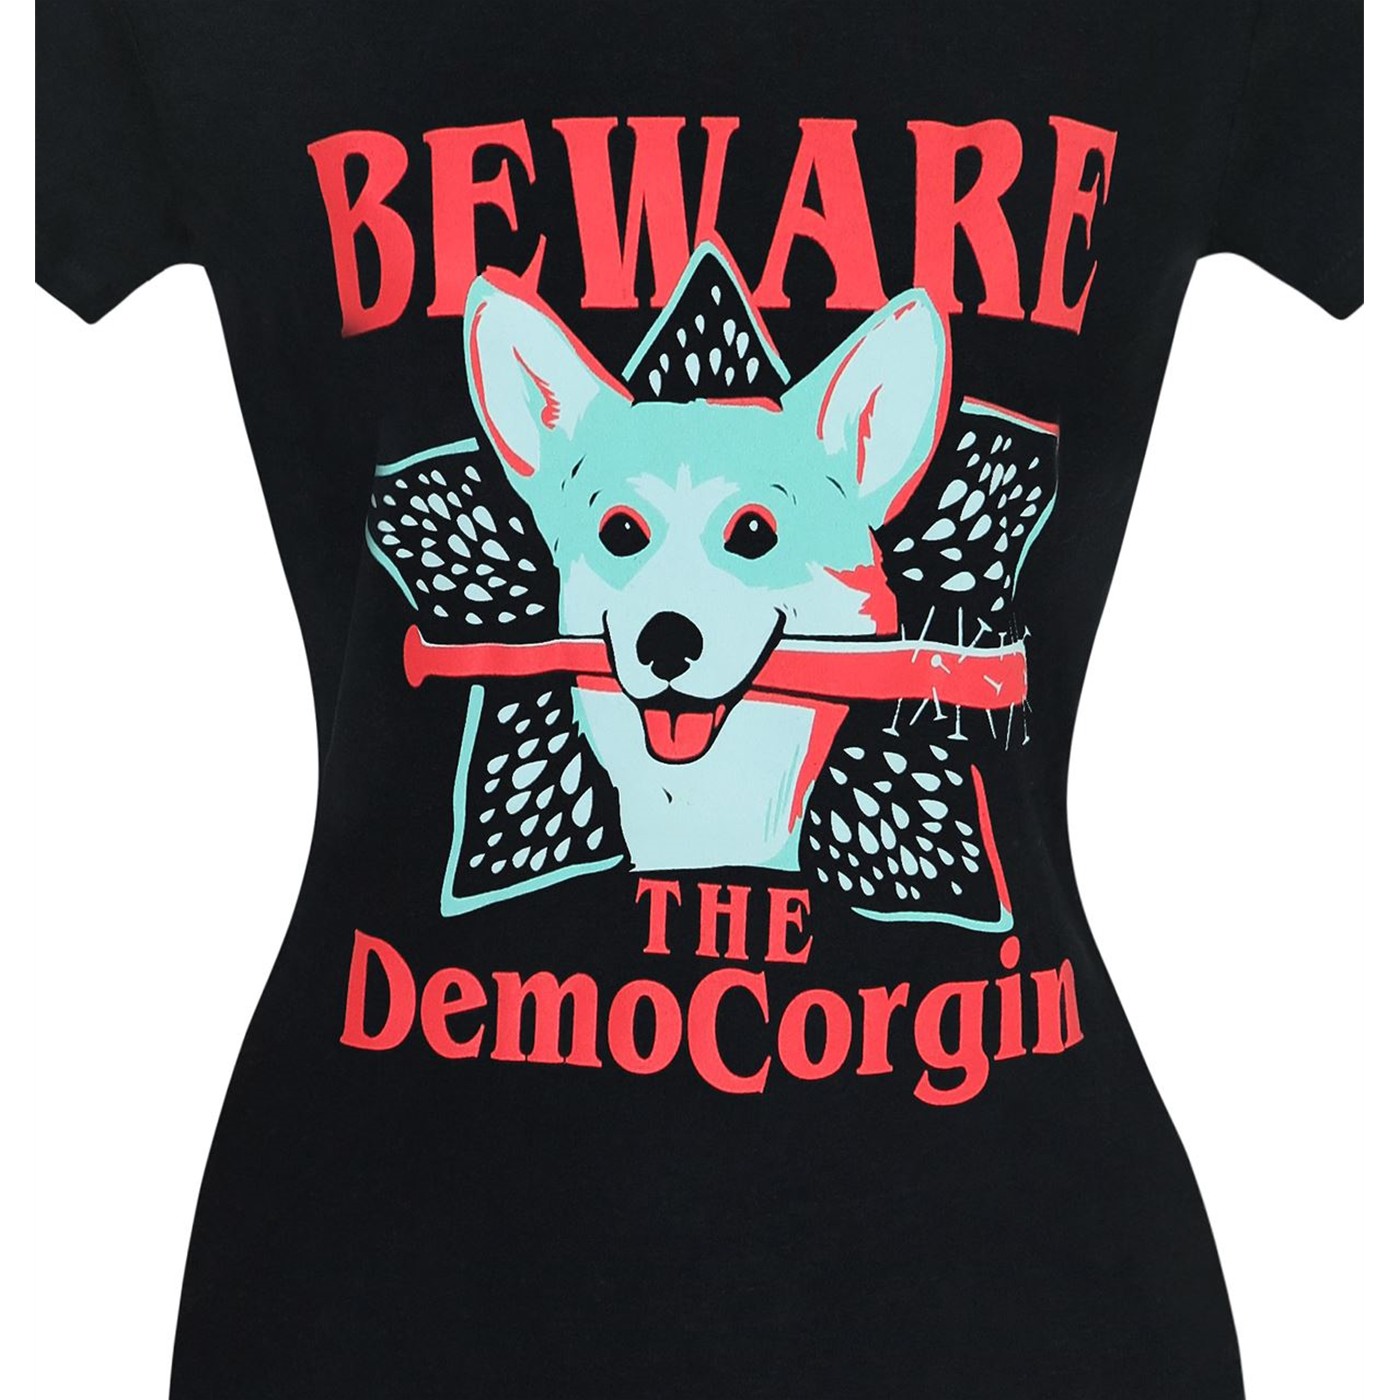 Beware the Democorgin Women's T-Shirt